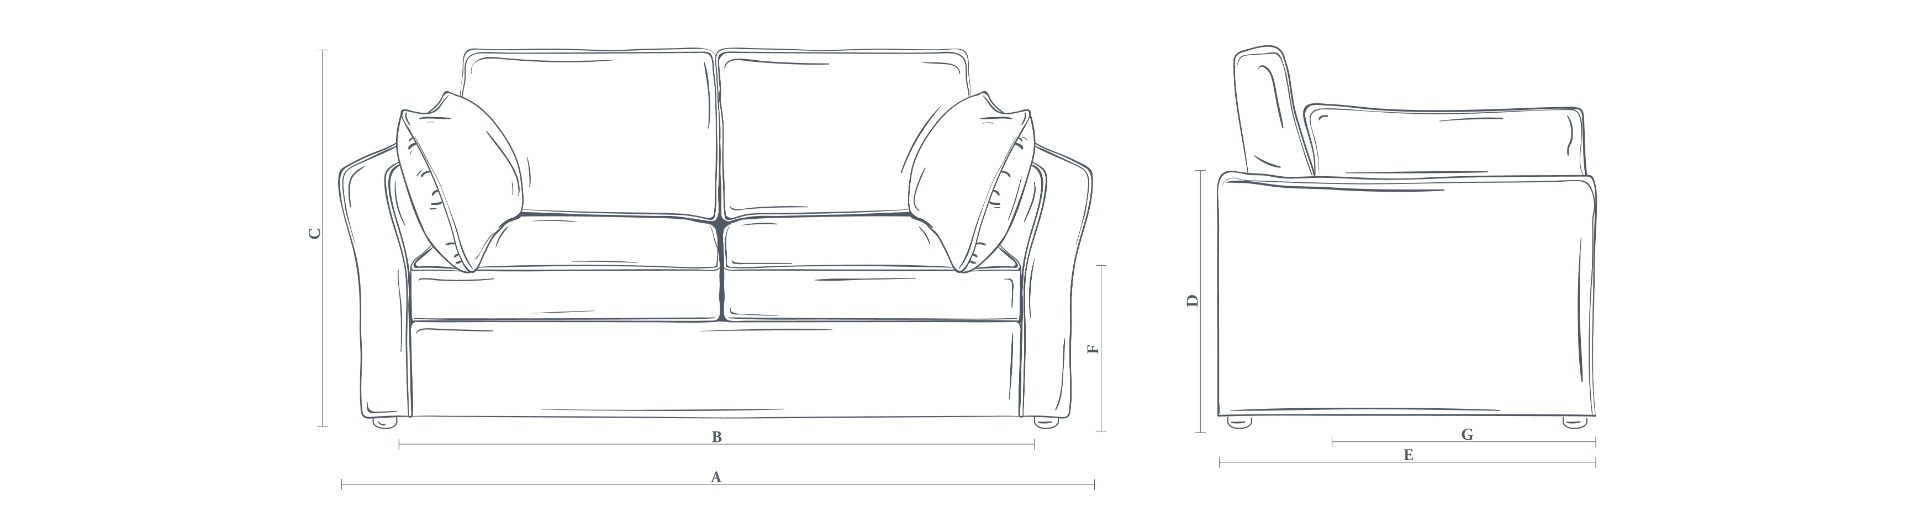 The Amesbury Sofa 3.5 Seater